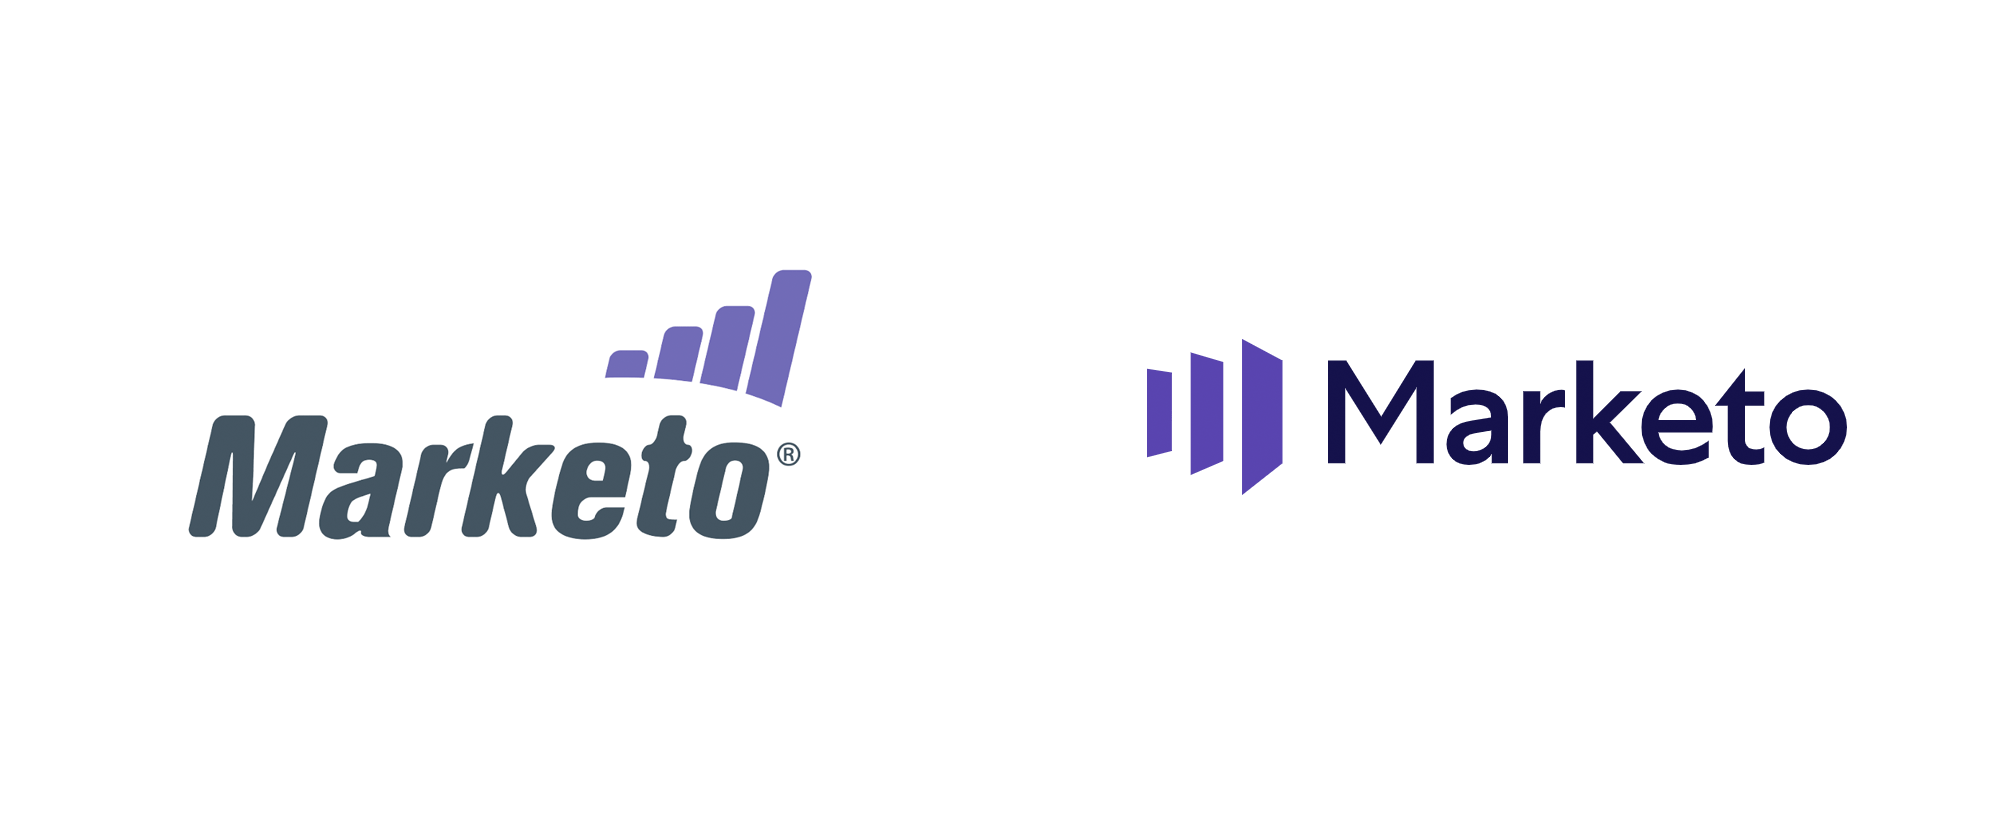 Marketo Logo - Brand New: New Logo for Marketo